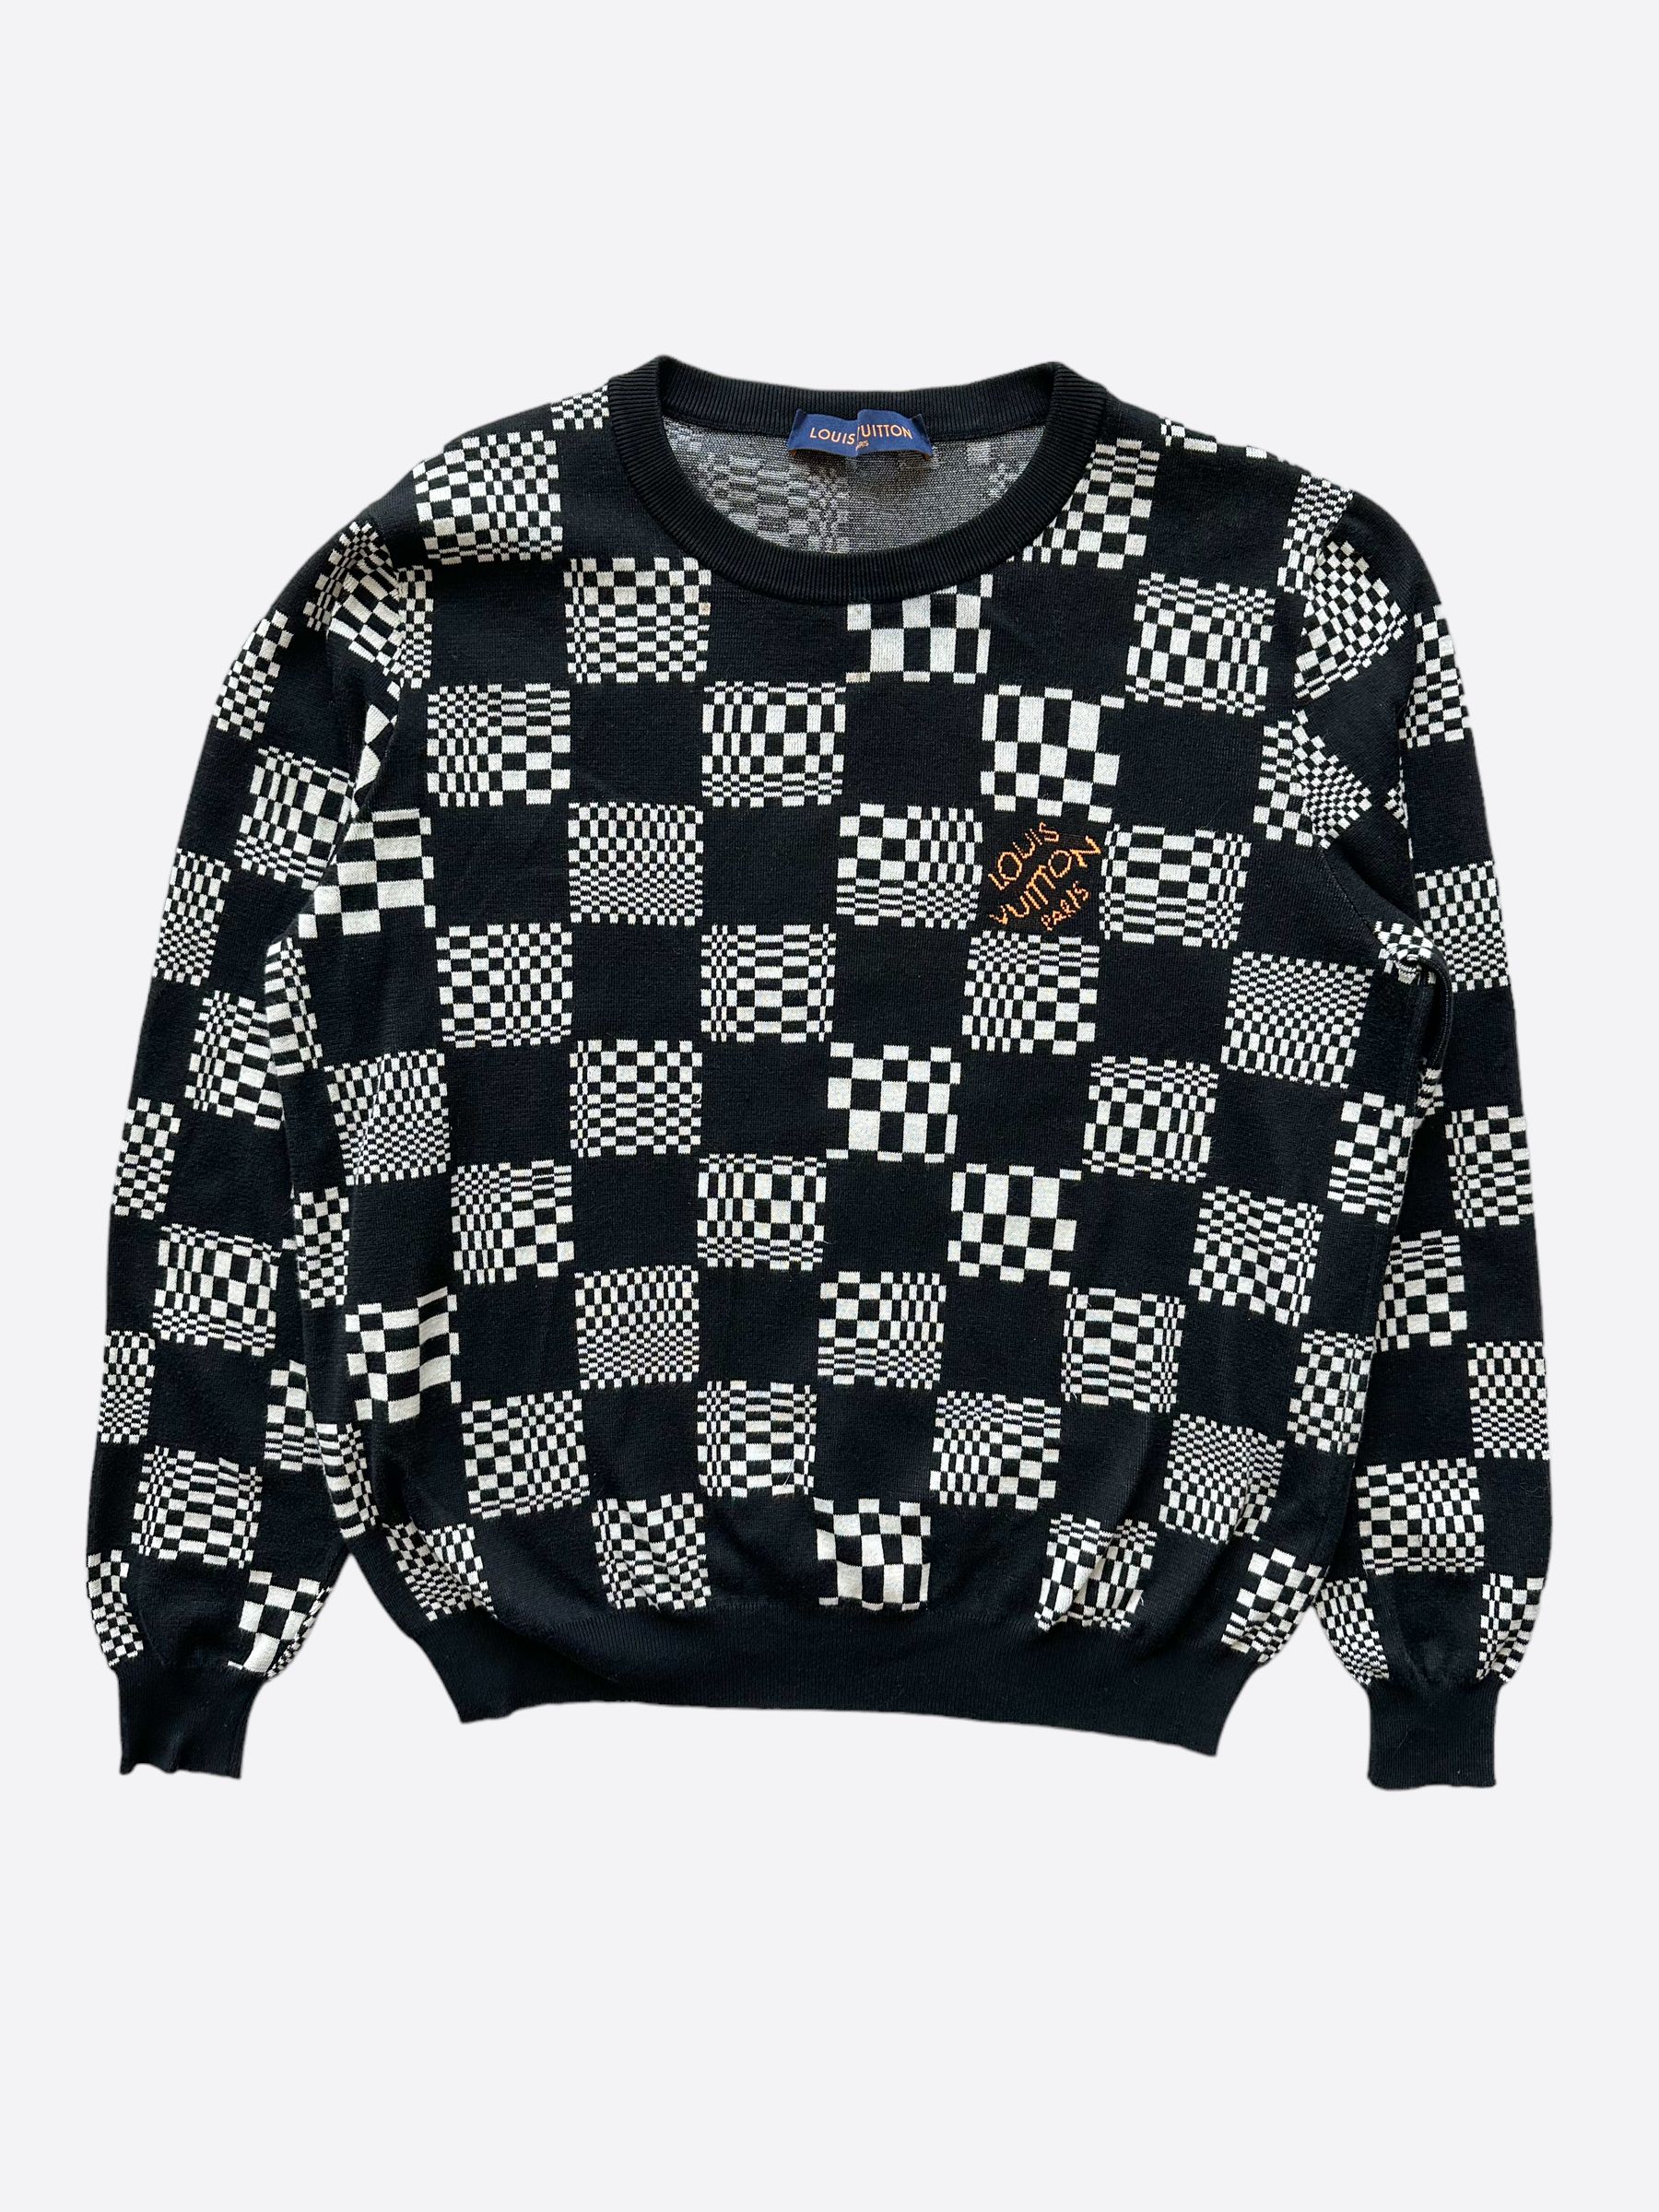 Louis Vuitton Pullover Men Sweater Jumper Size L (S200) For Sale